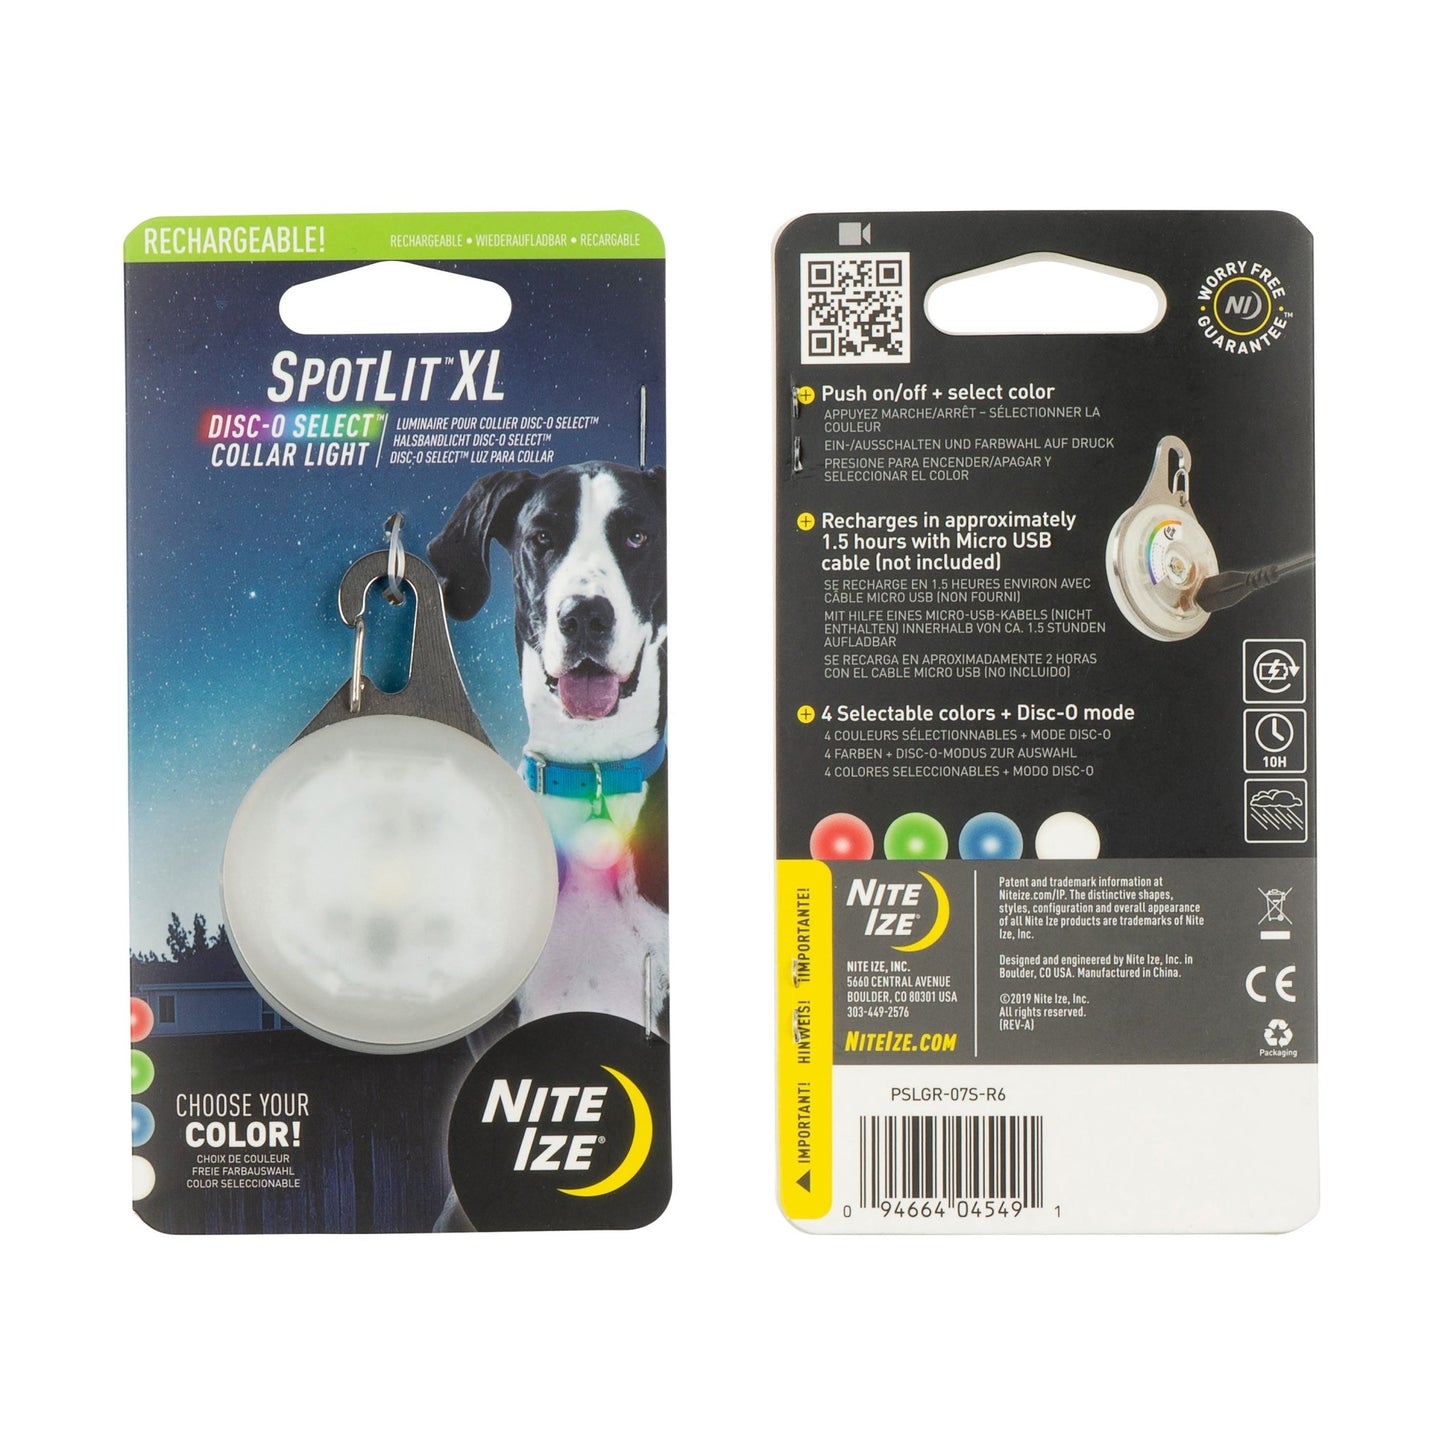 Nite Ize SpotLit Rechargeable LED Lights XL